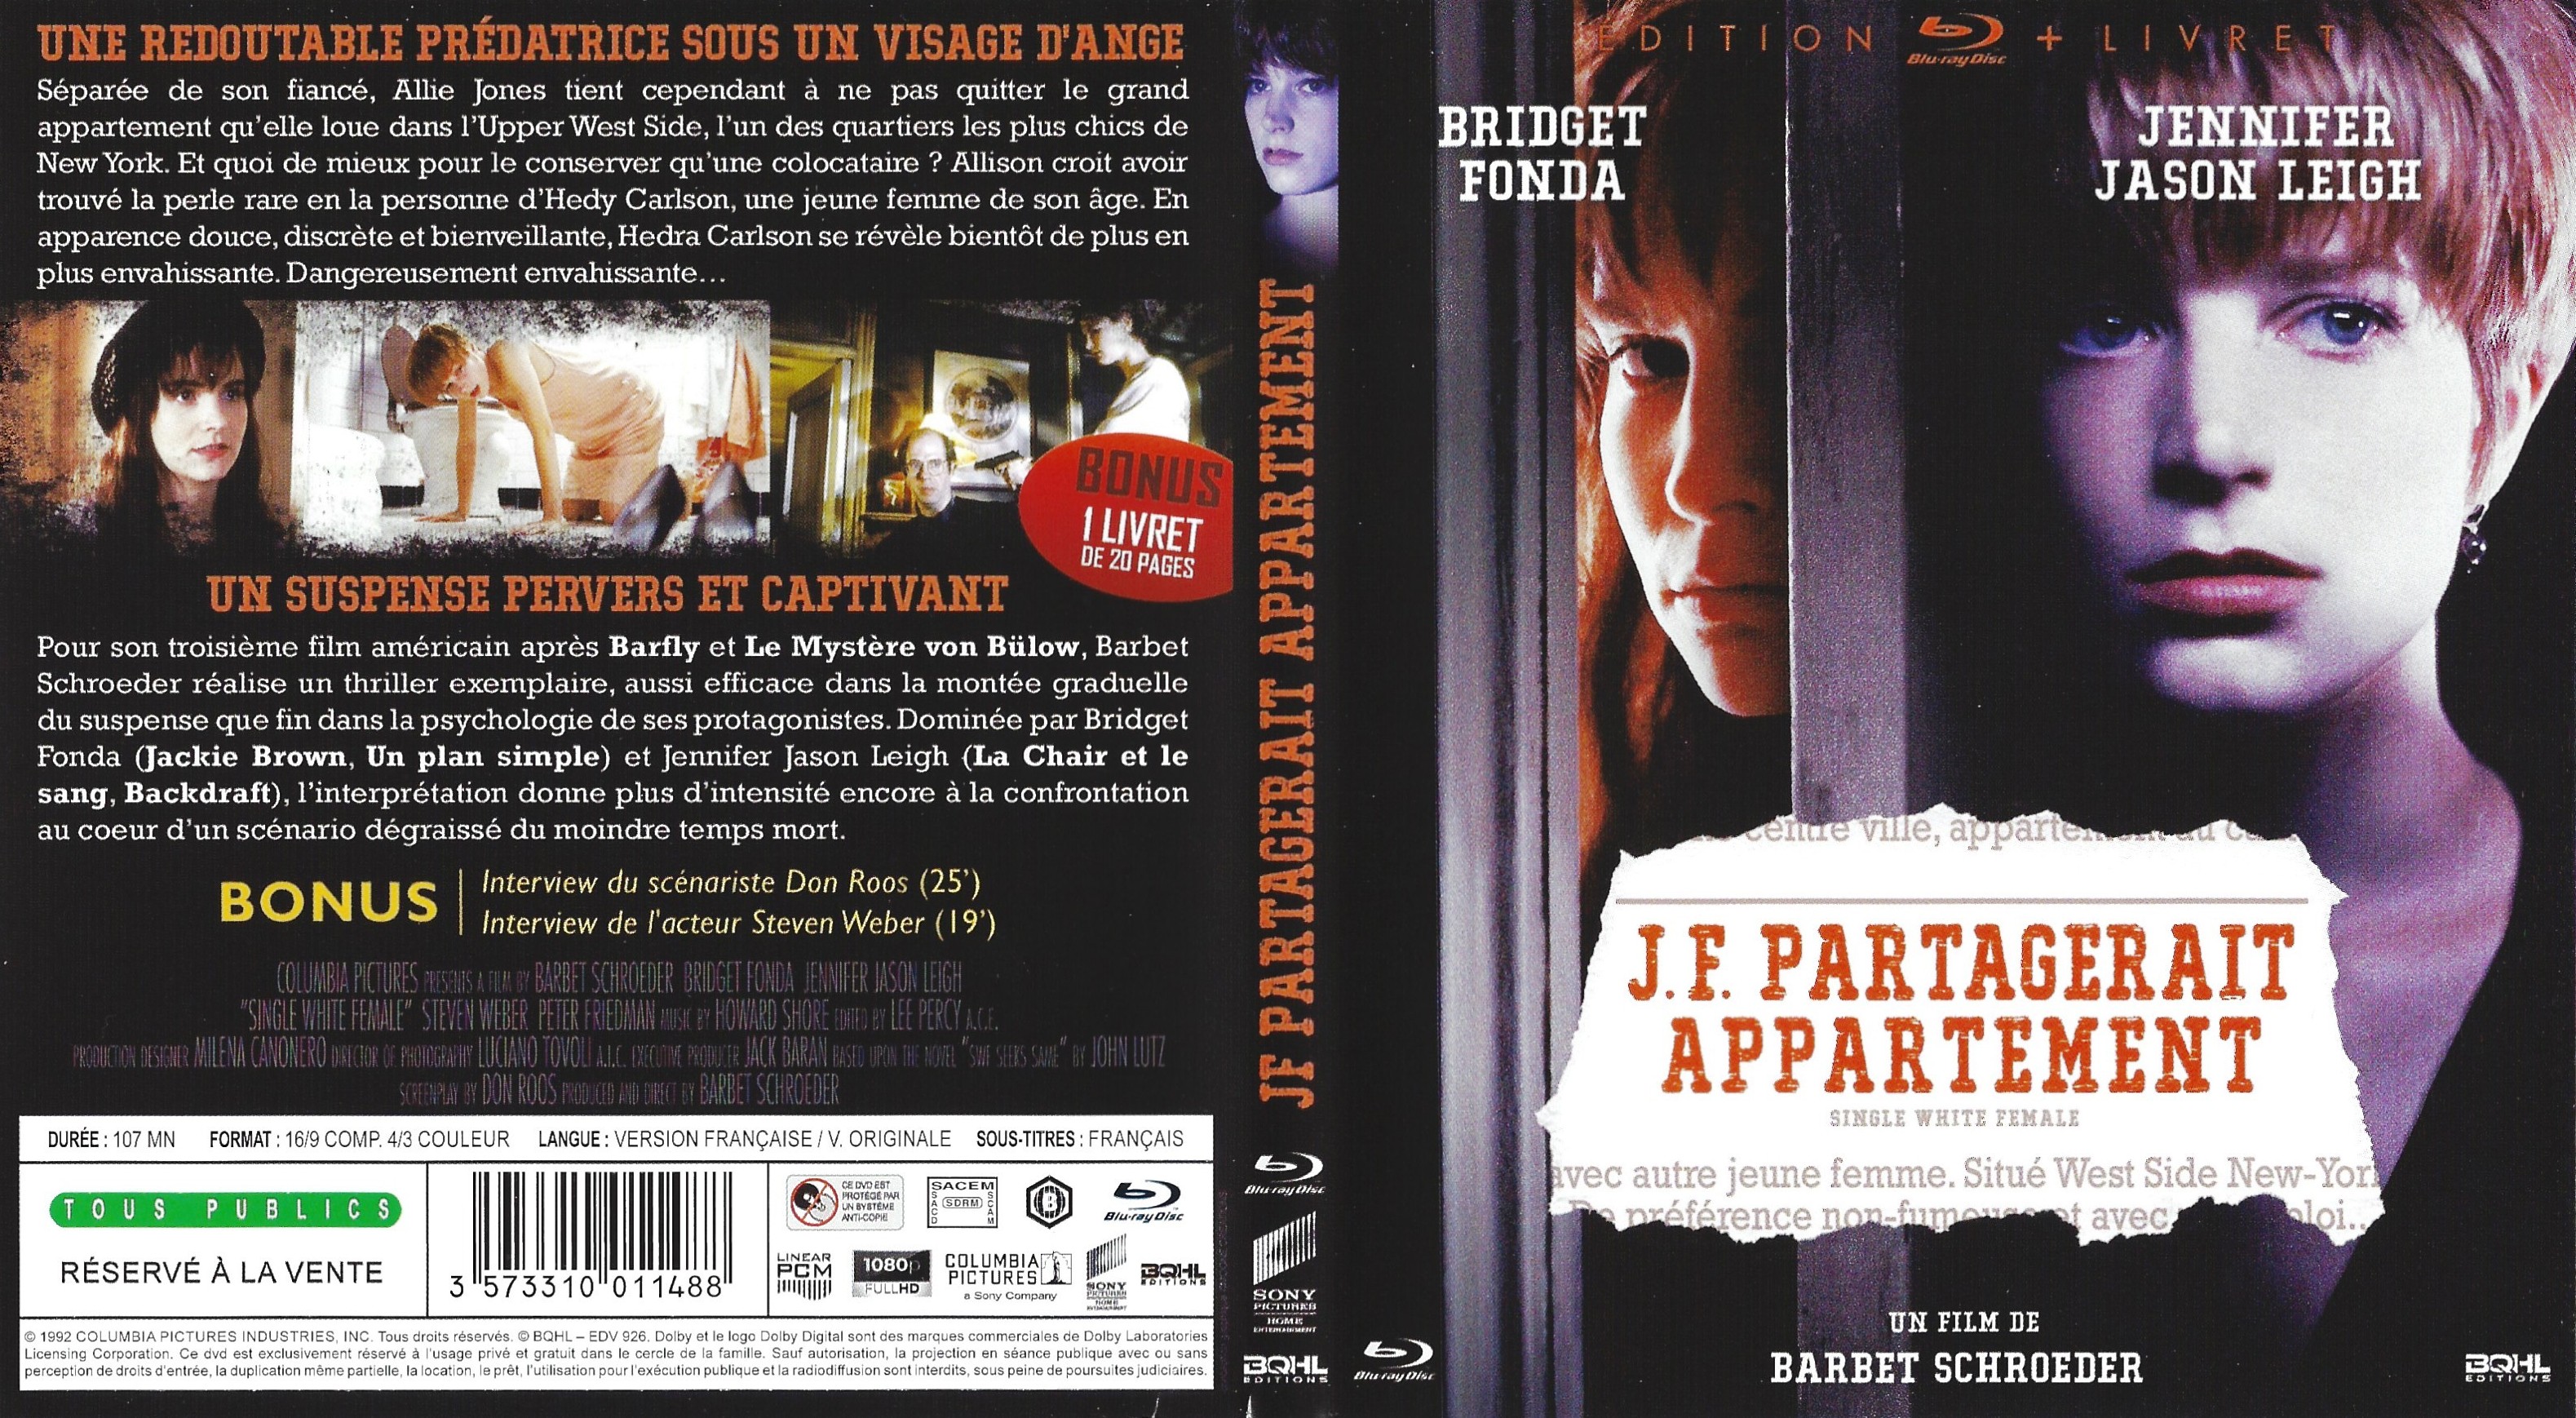 Jaquette DVD JF partagerait appartement (BLU-RAY)